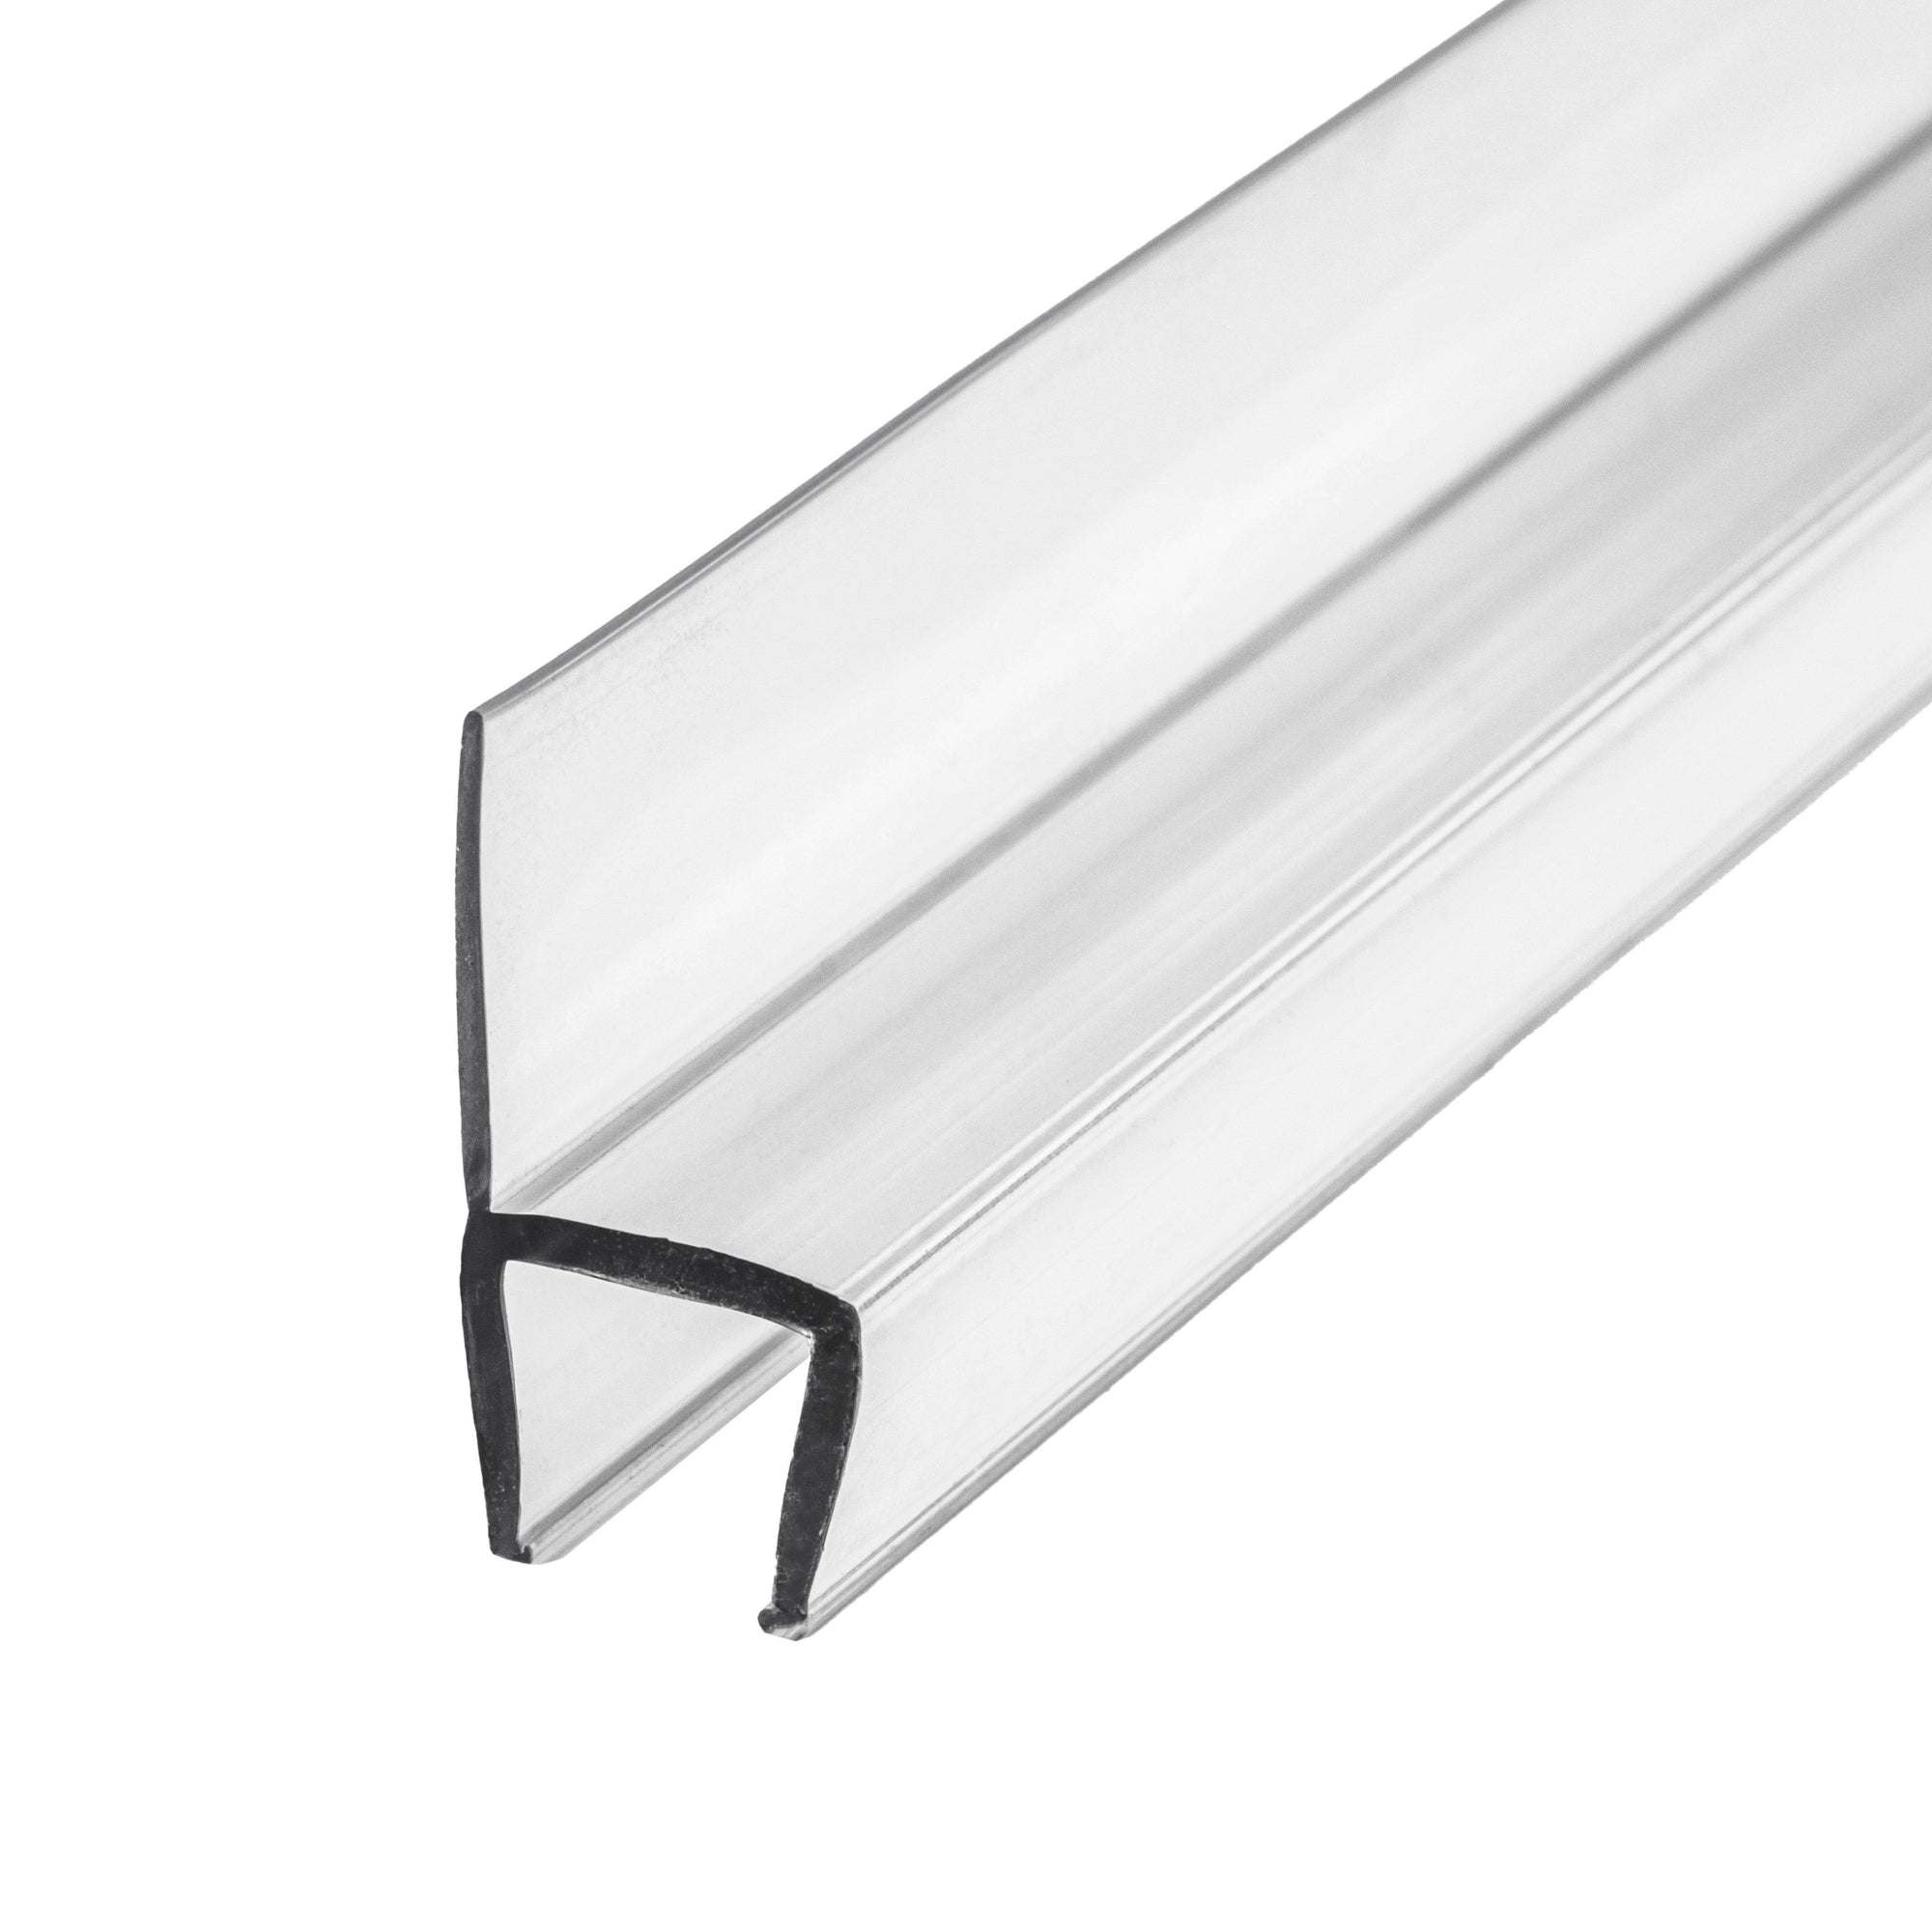 Shower Door Side Seal Strip for 1/2" Glass, "h" Jamb 78" in Long